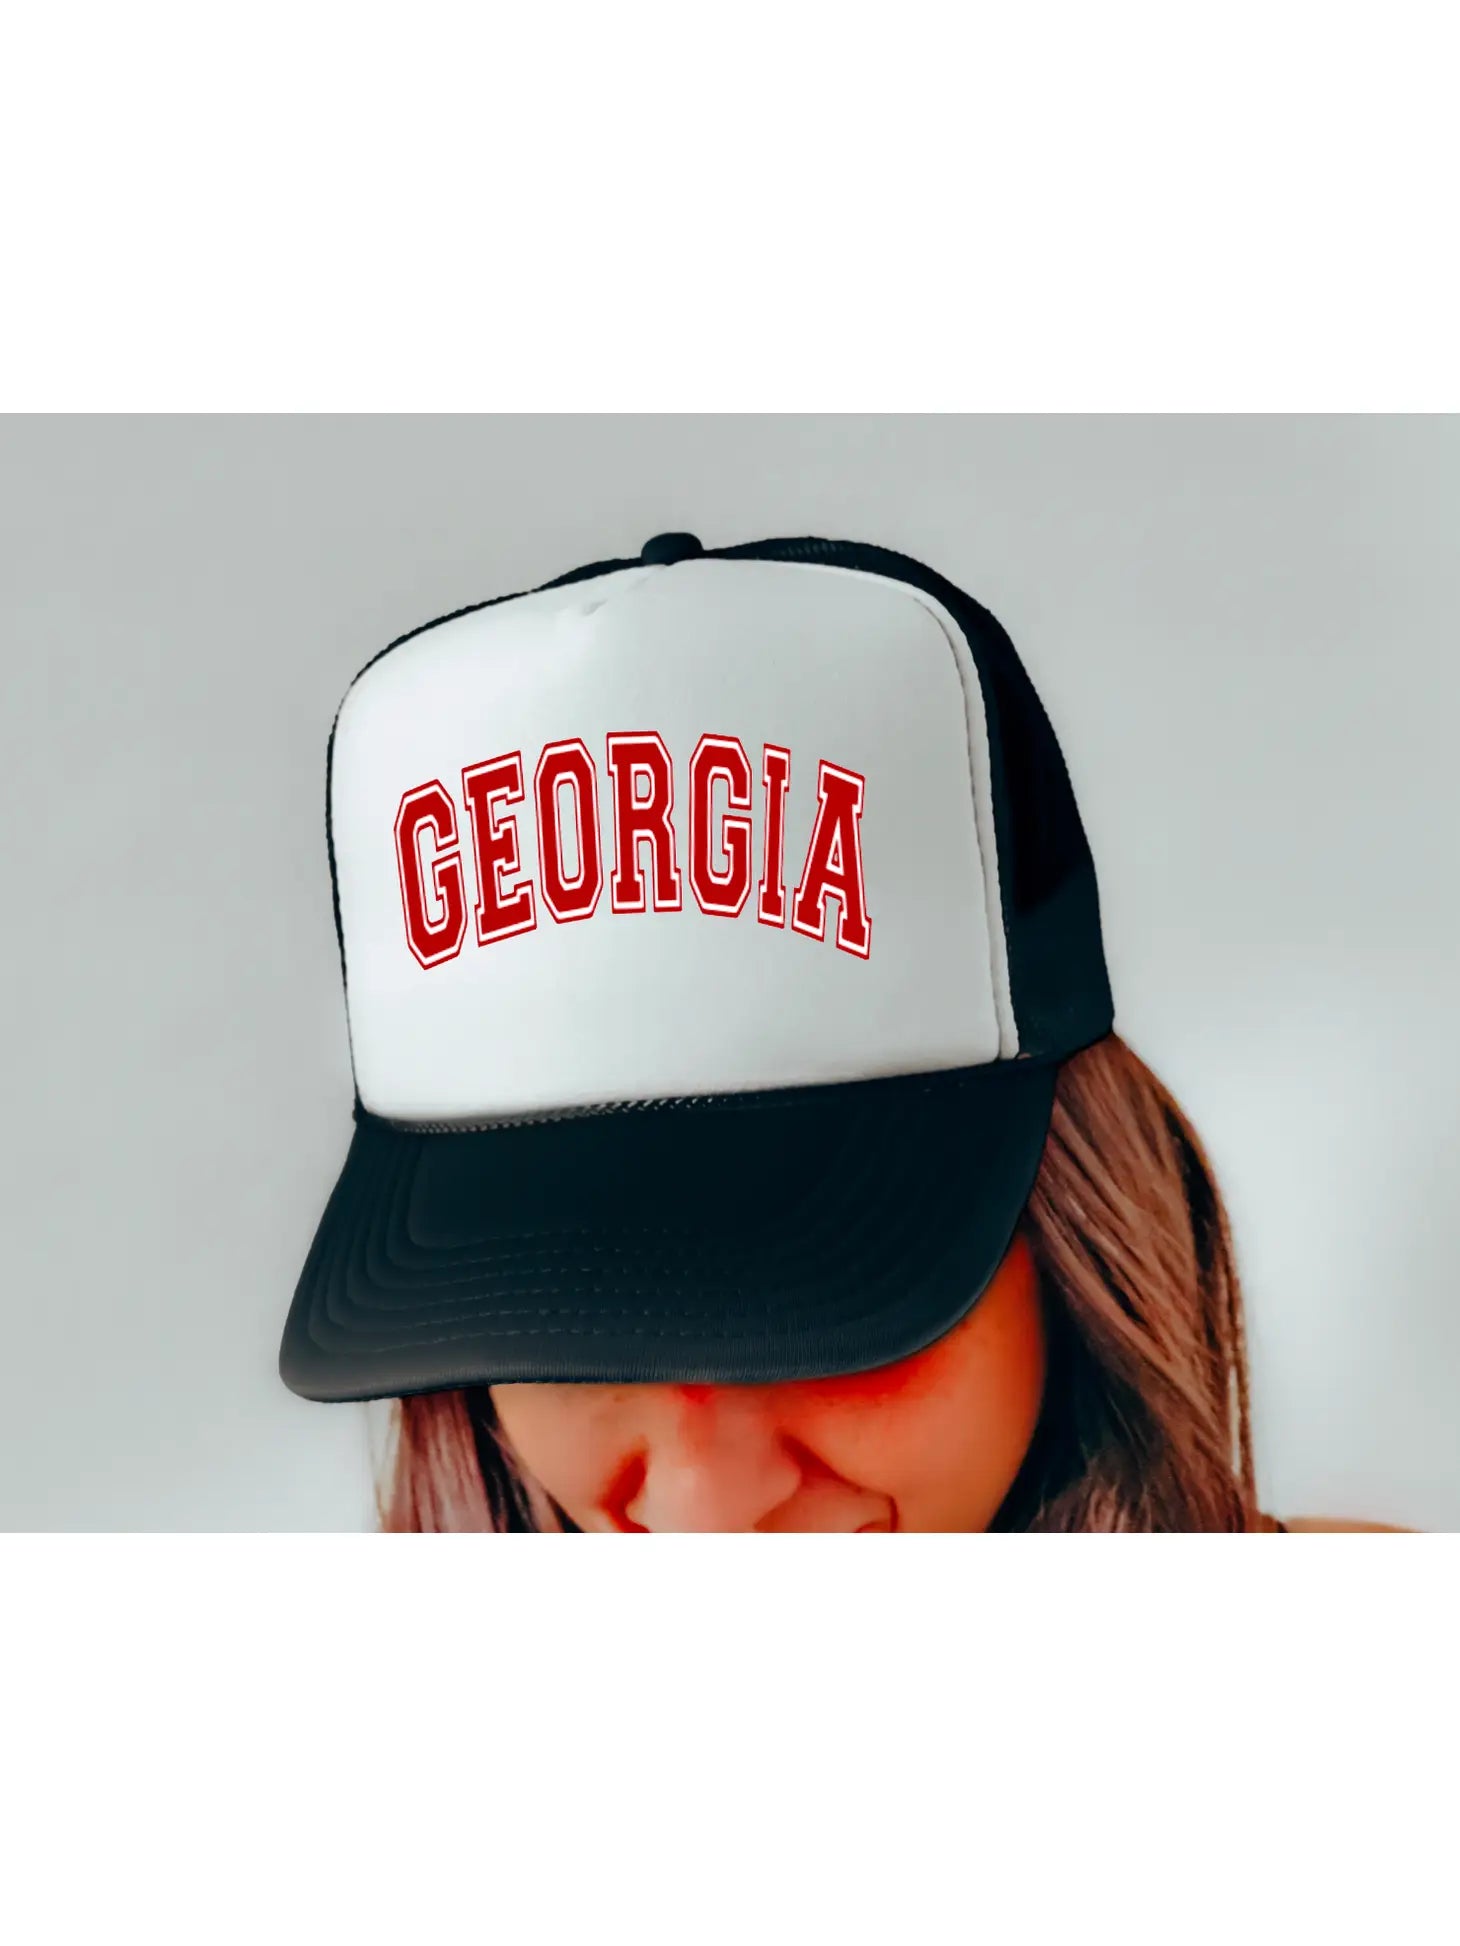 Georgia Baseball Hat- Two Options